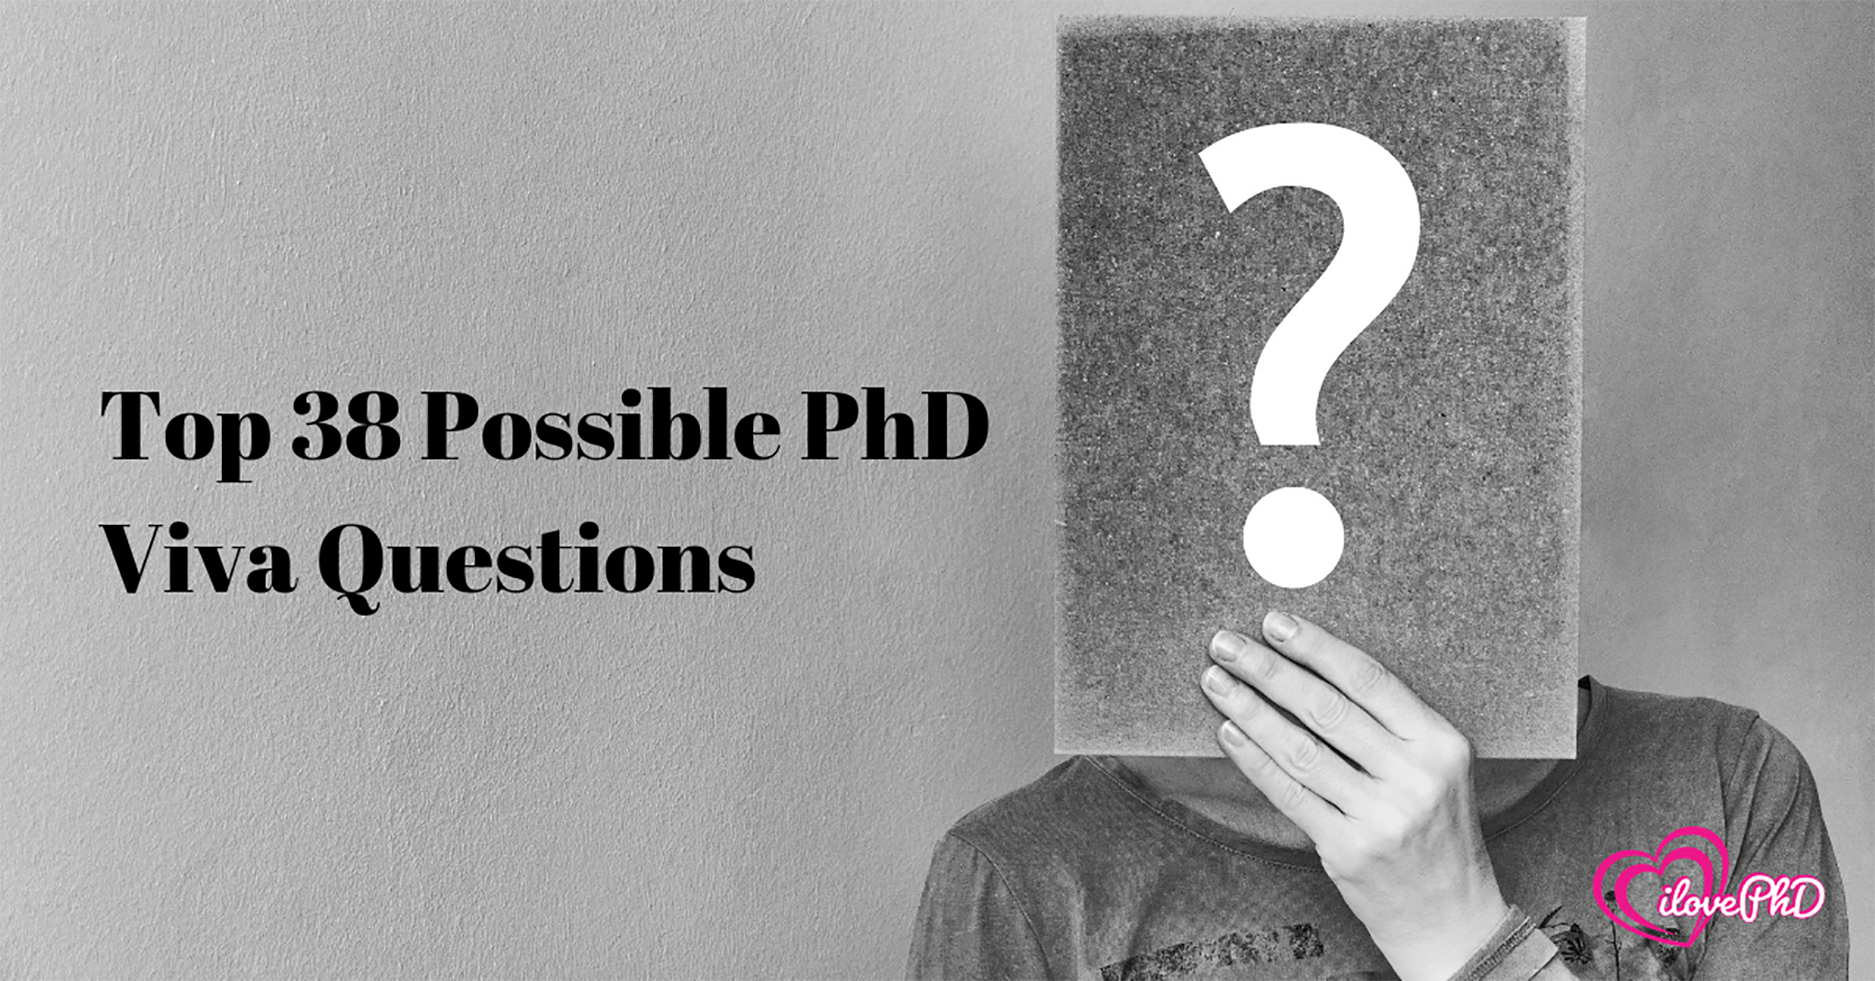 viva questions for dissertation